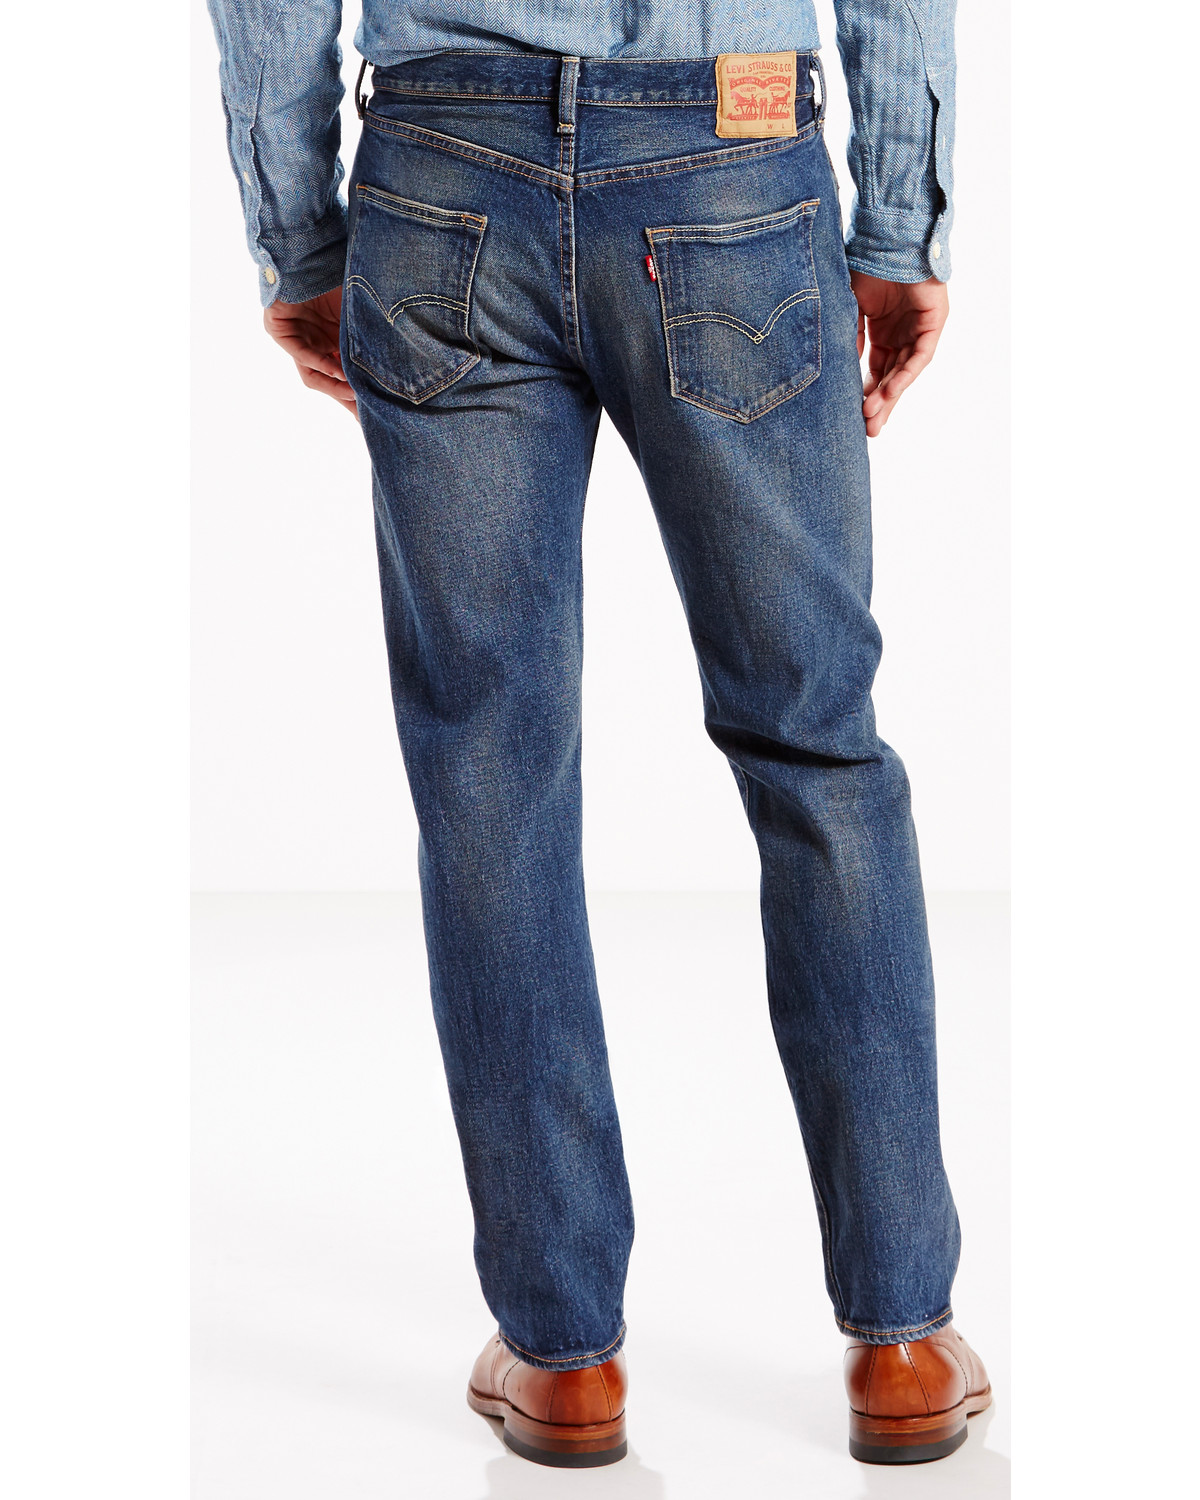 mens 501 stretch jeans